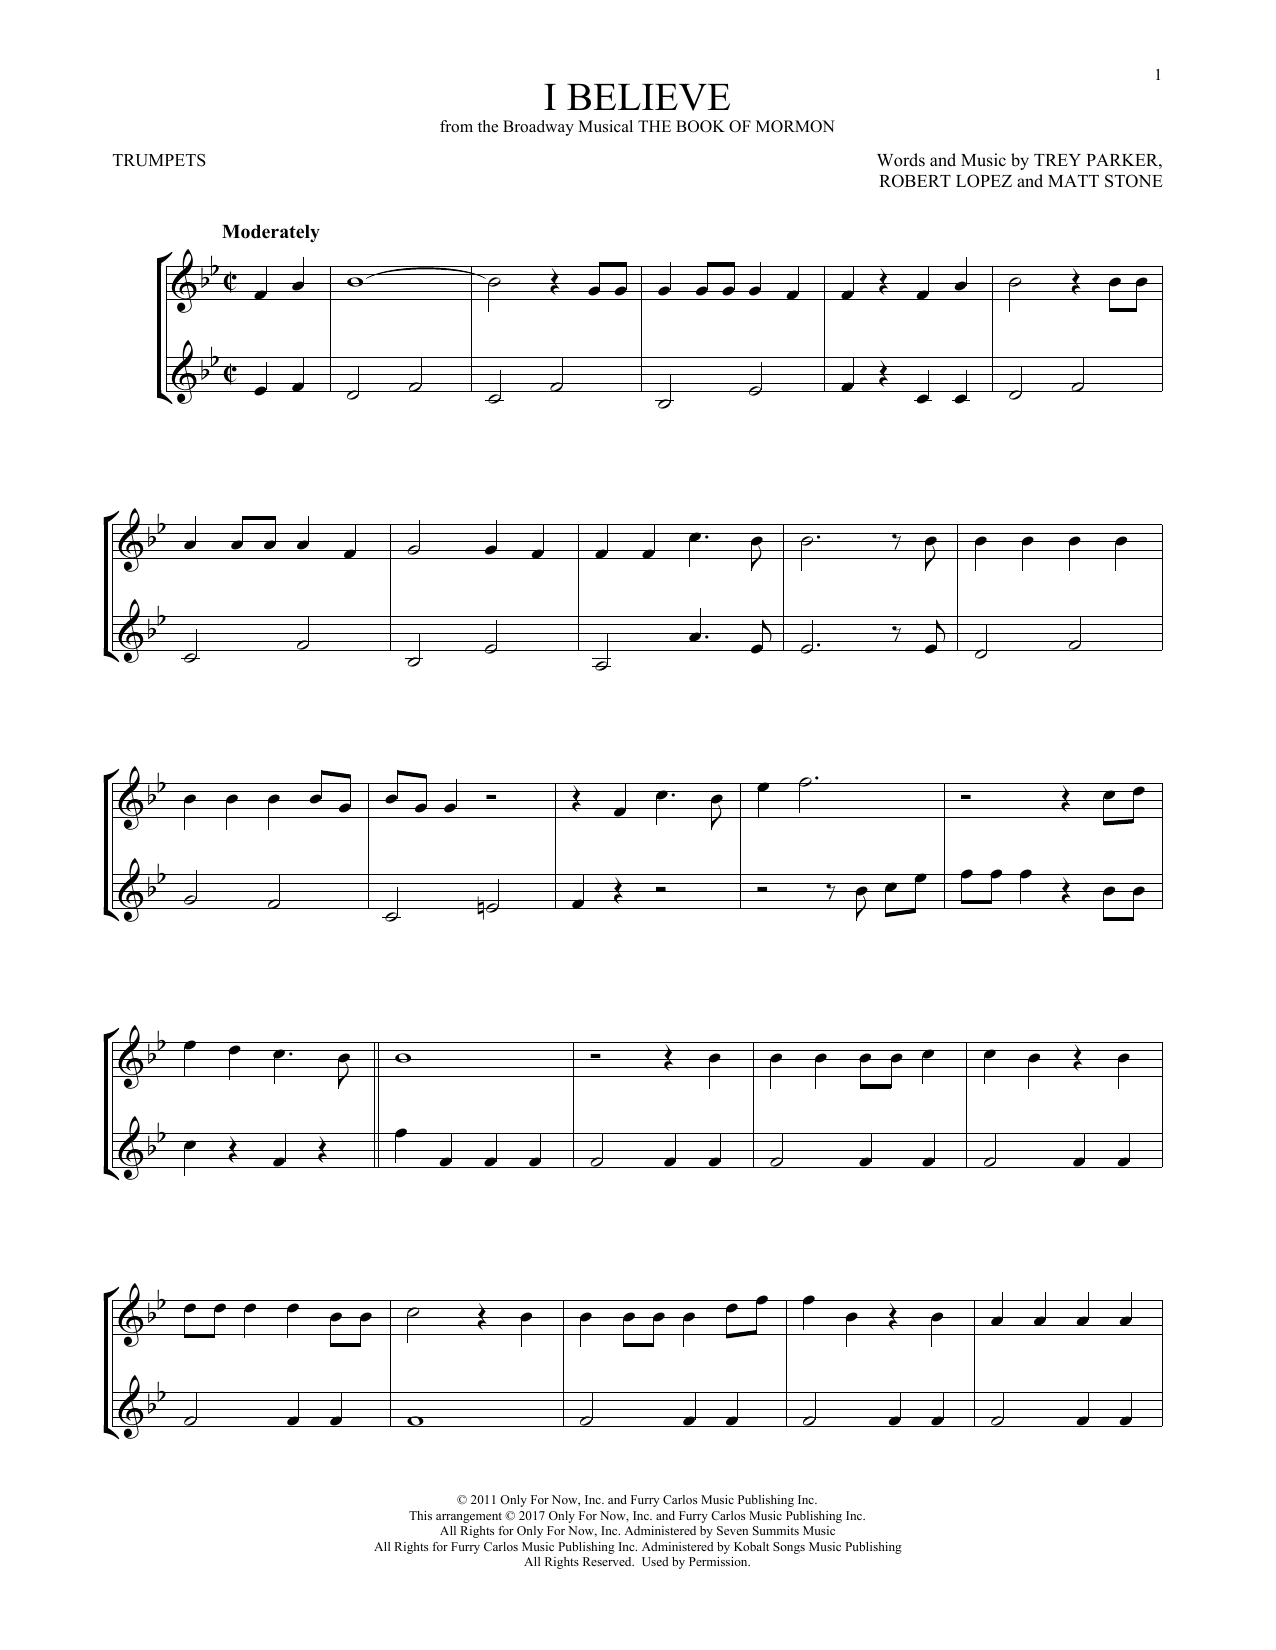 Trey Parker, Matt Stone & Robert Lopez I Believe Sheet Music Notes & Chords for Trumpet Duet - Download or Print PDF